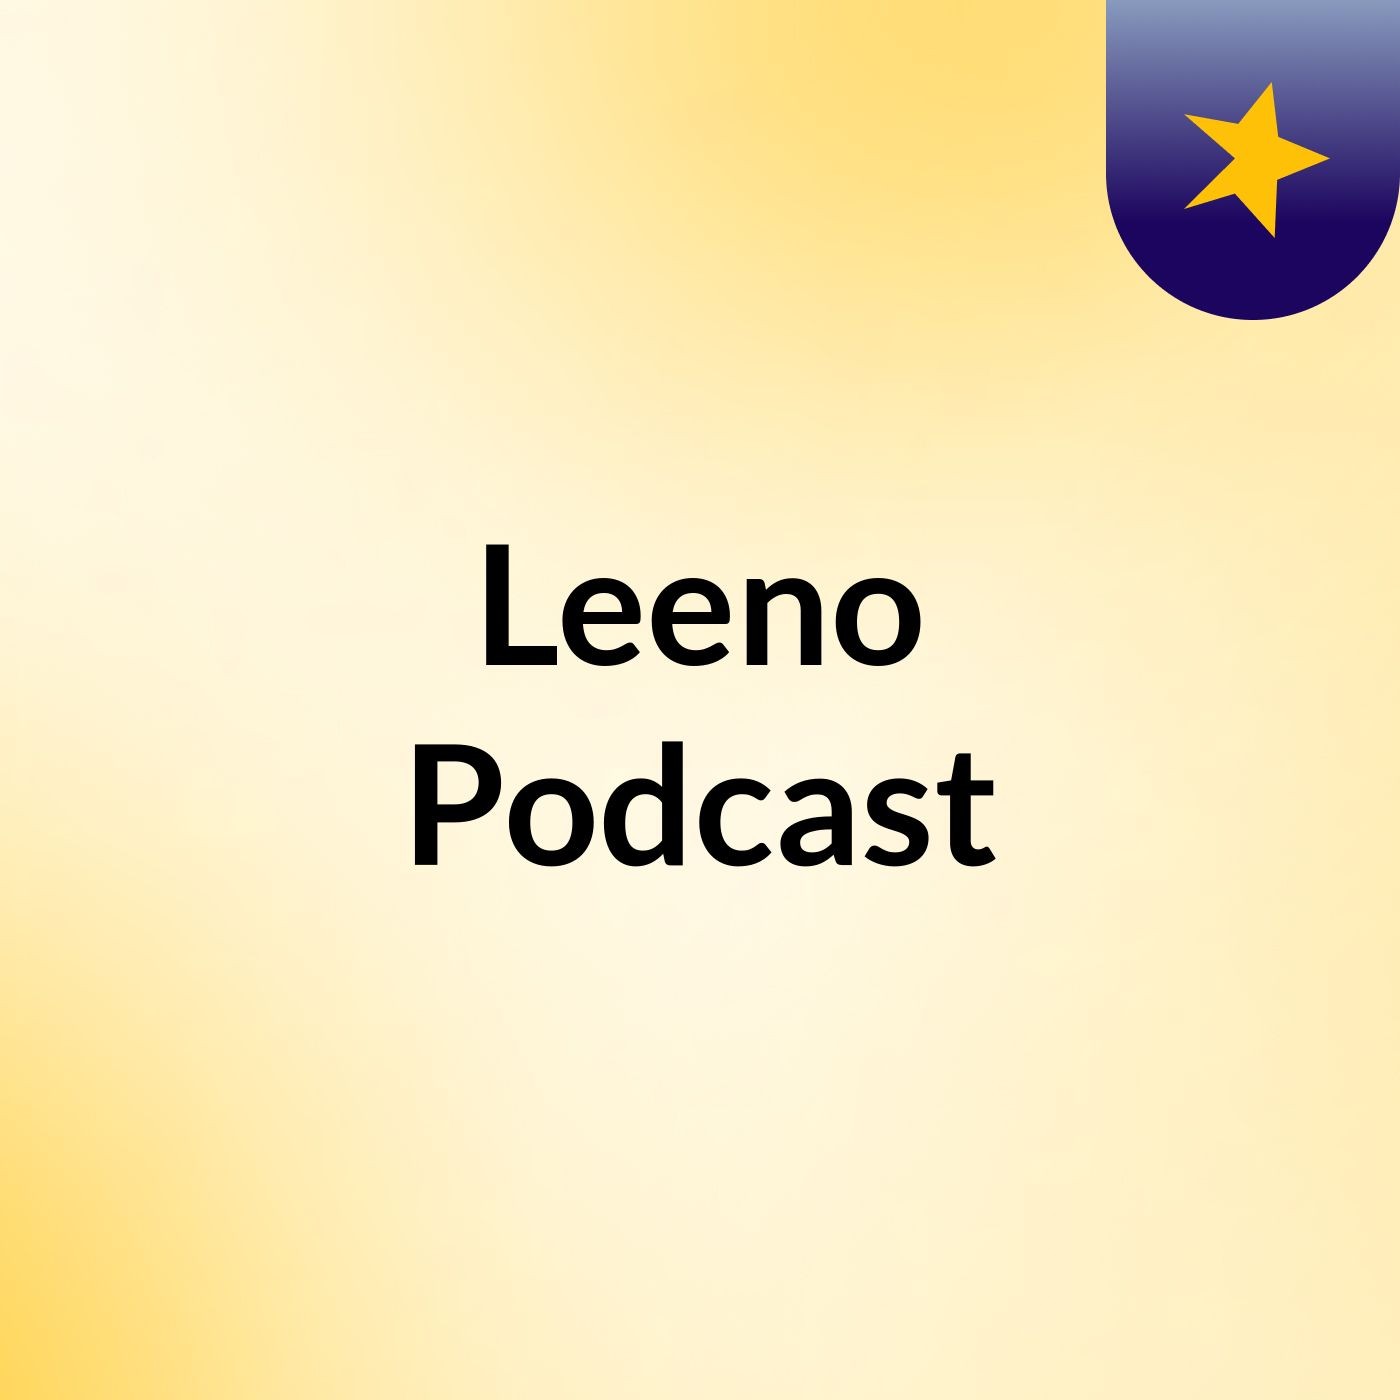 Leeno Podcast